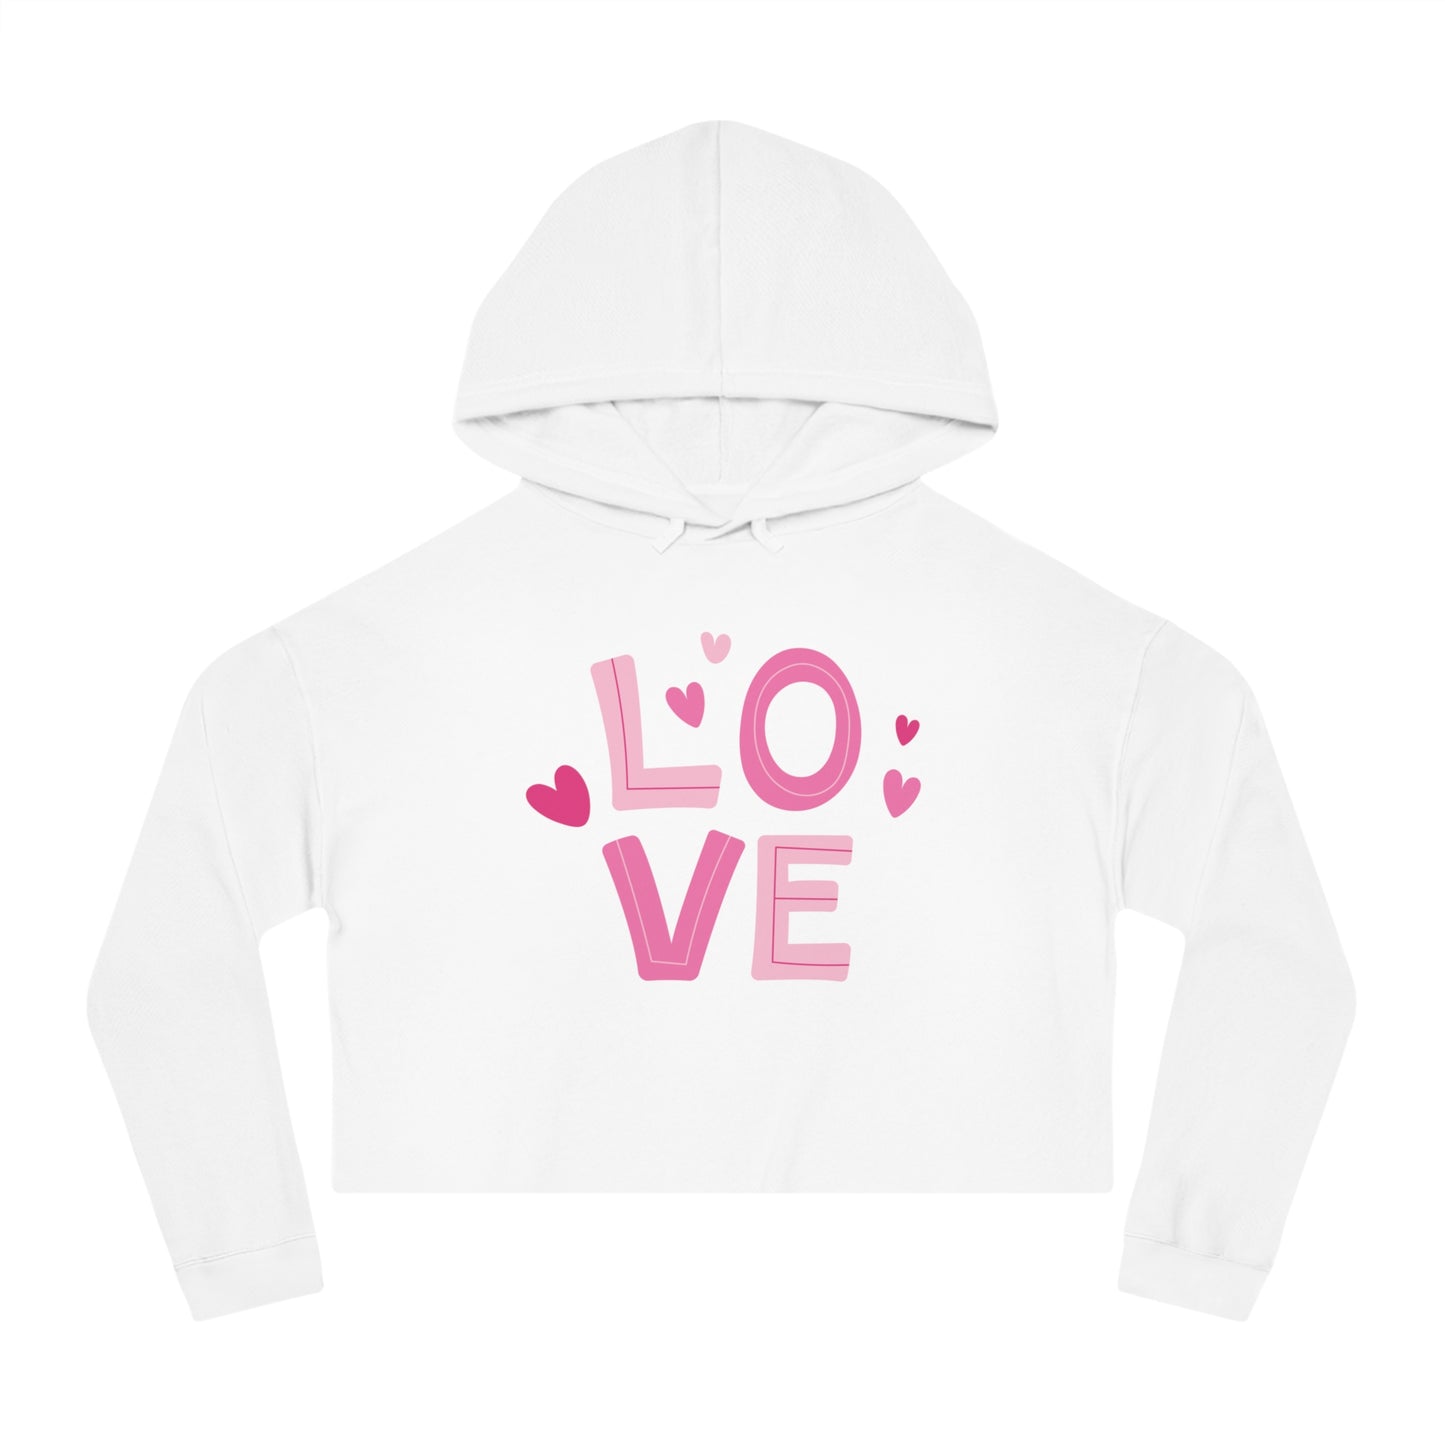 Valentine Sweatshirt for Her, Women’s Cropped Hooded Sweatshirt